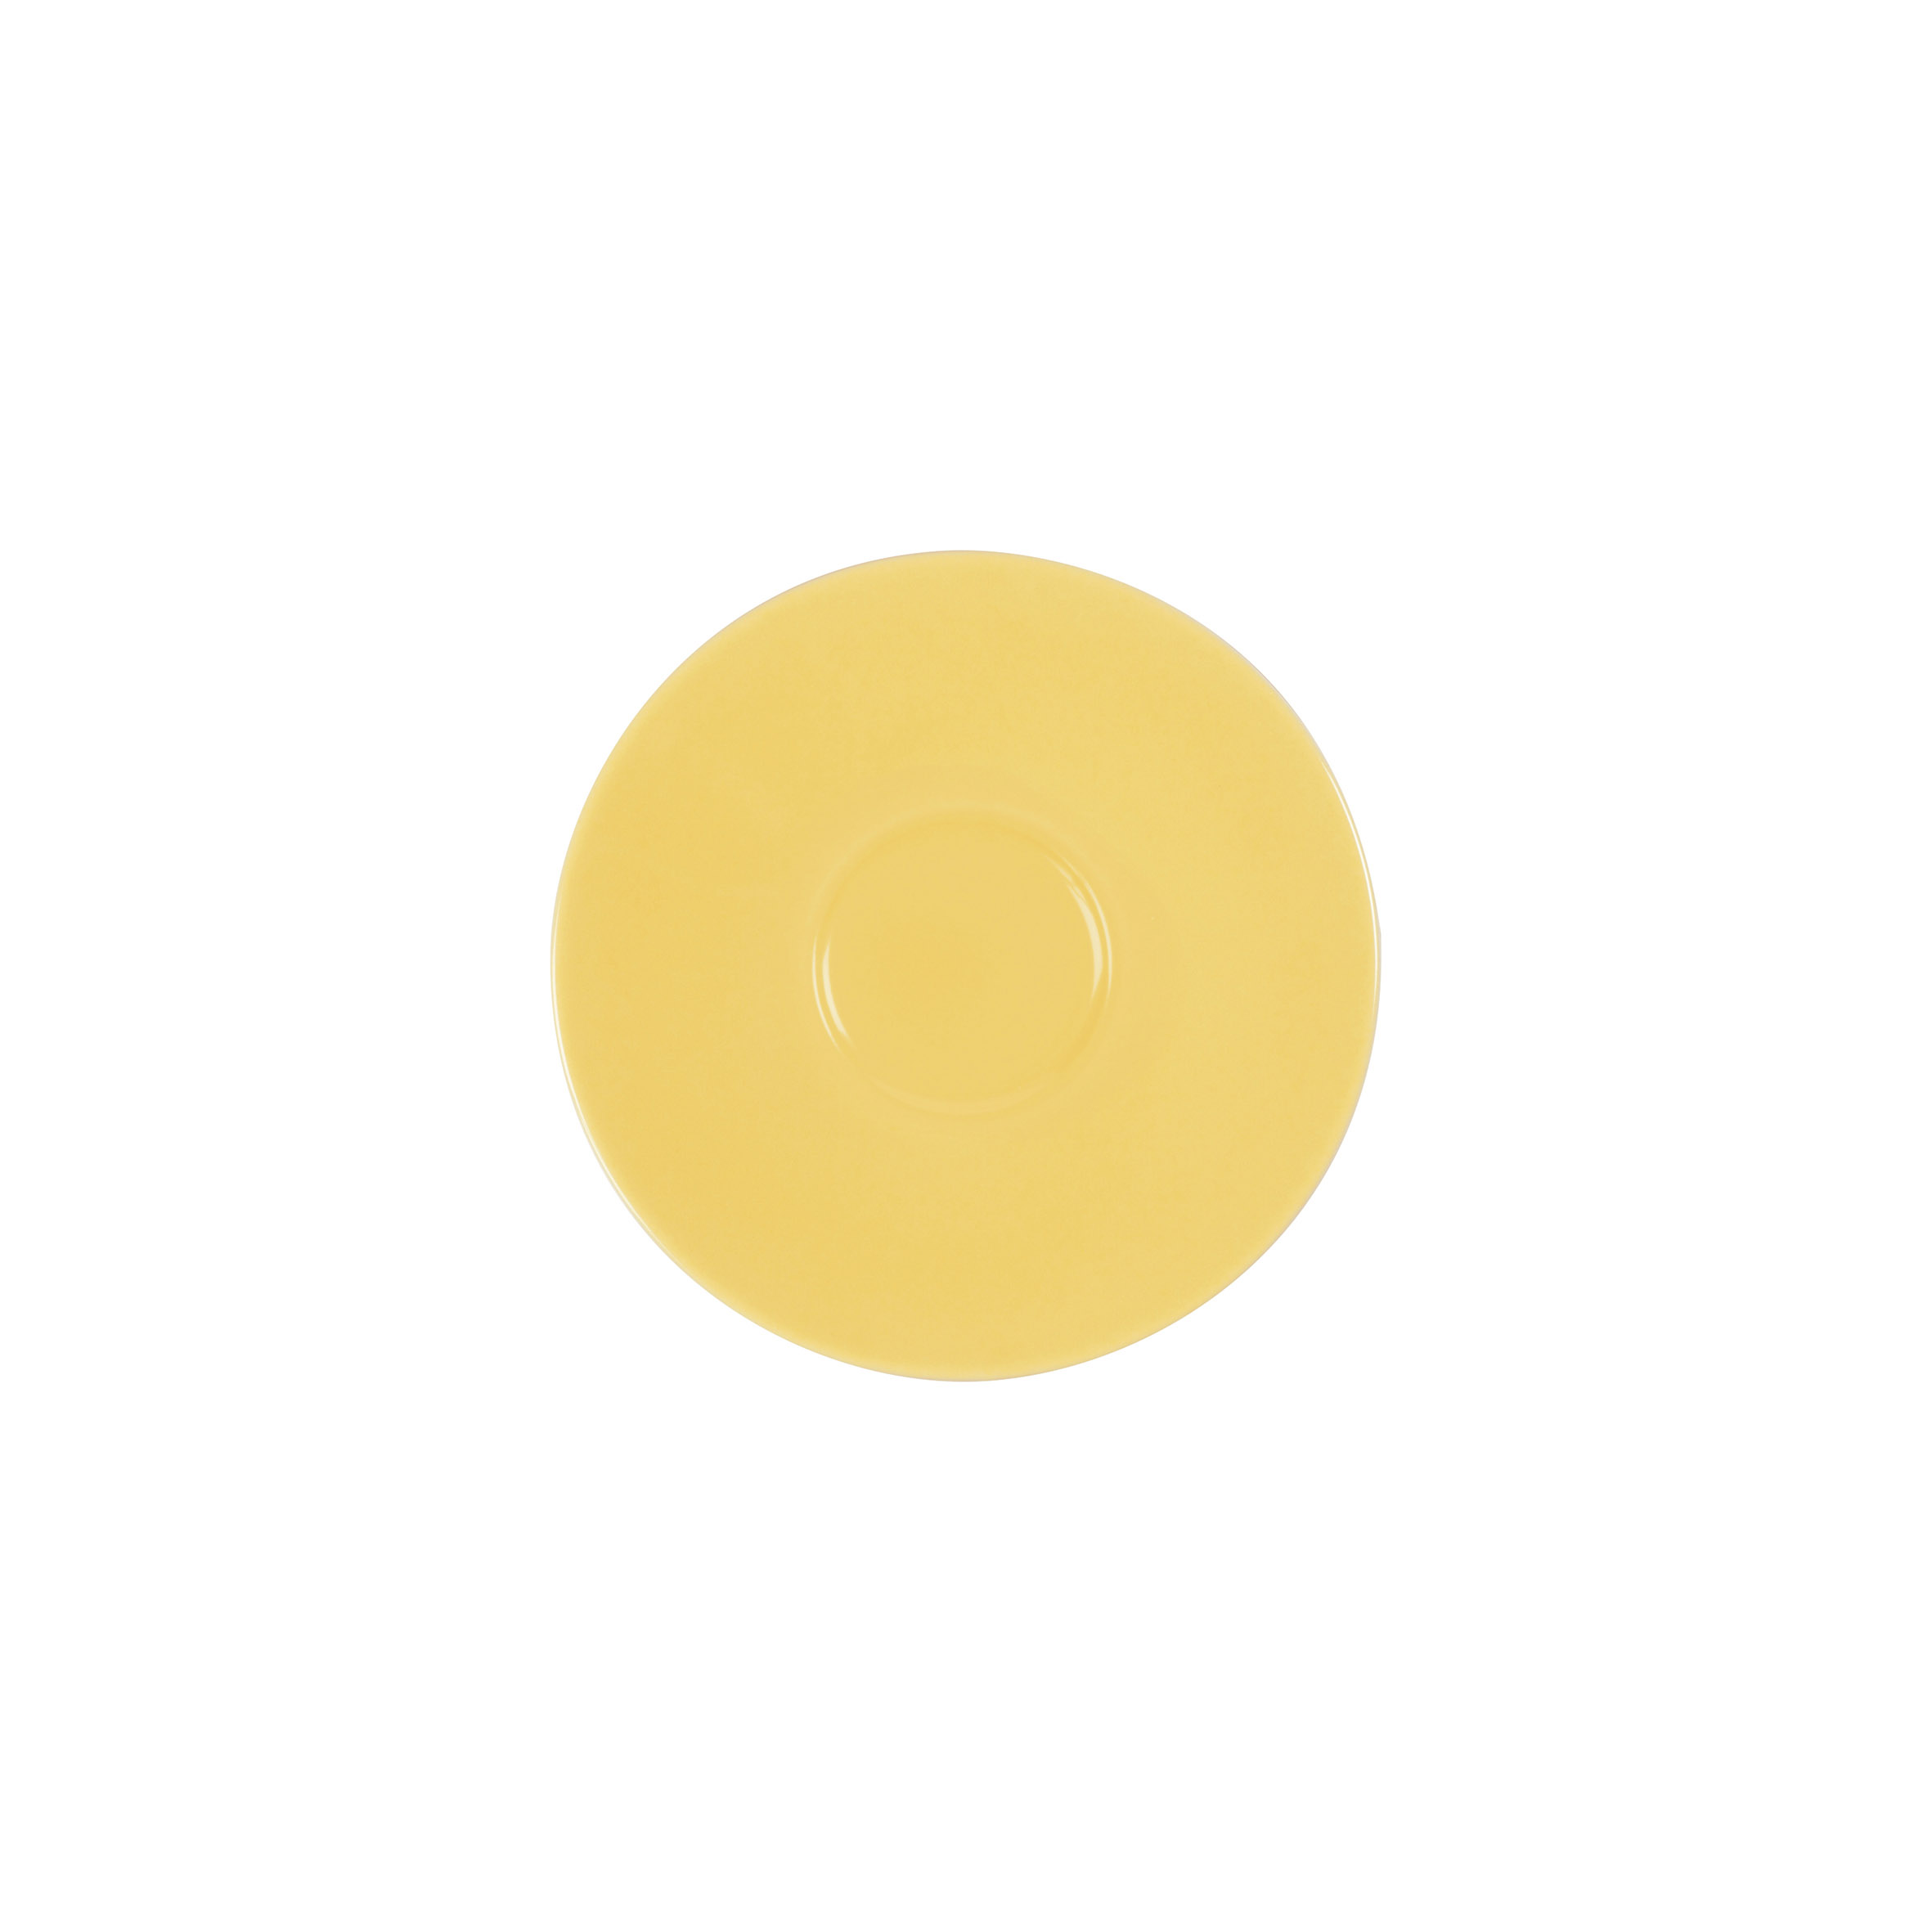 Kombi-Untertasse 16cm, Farbe: light yellow / hellgelb,